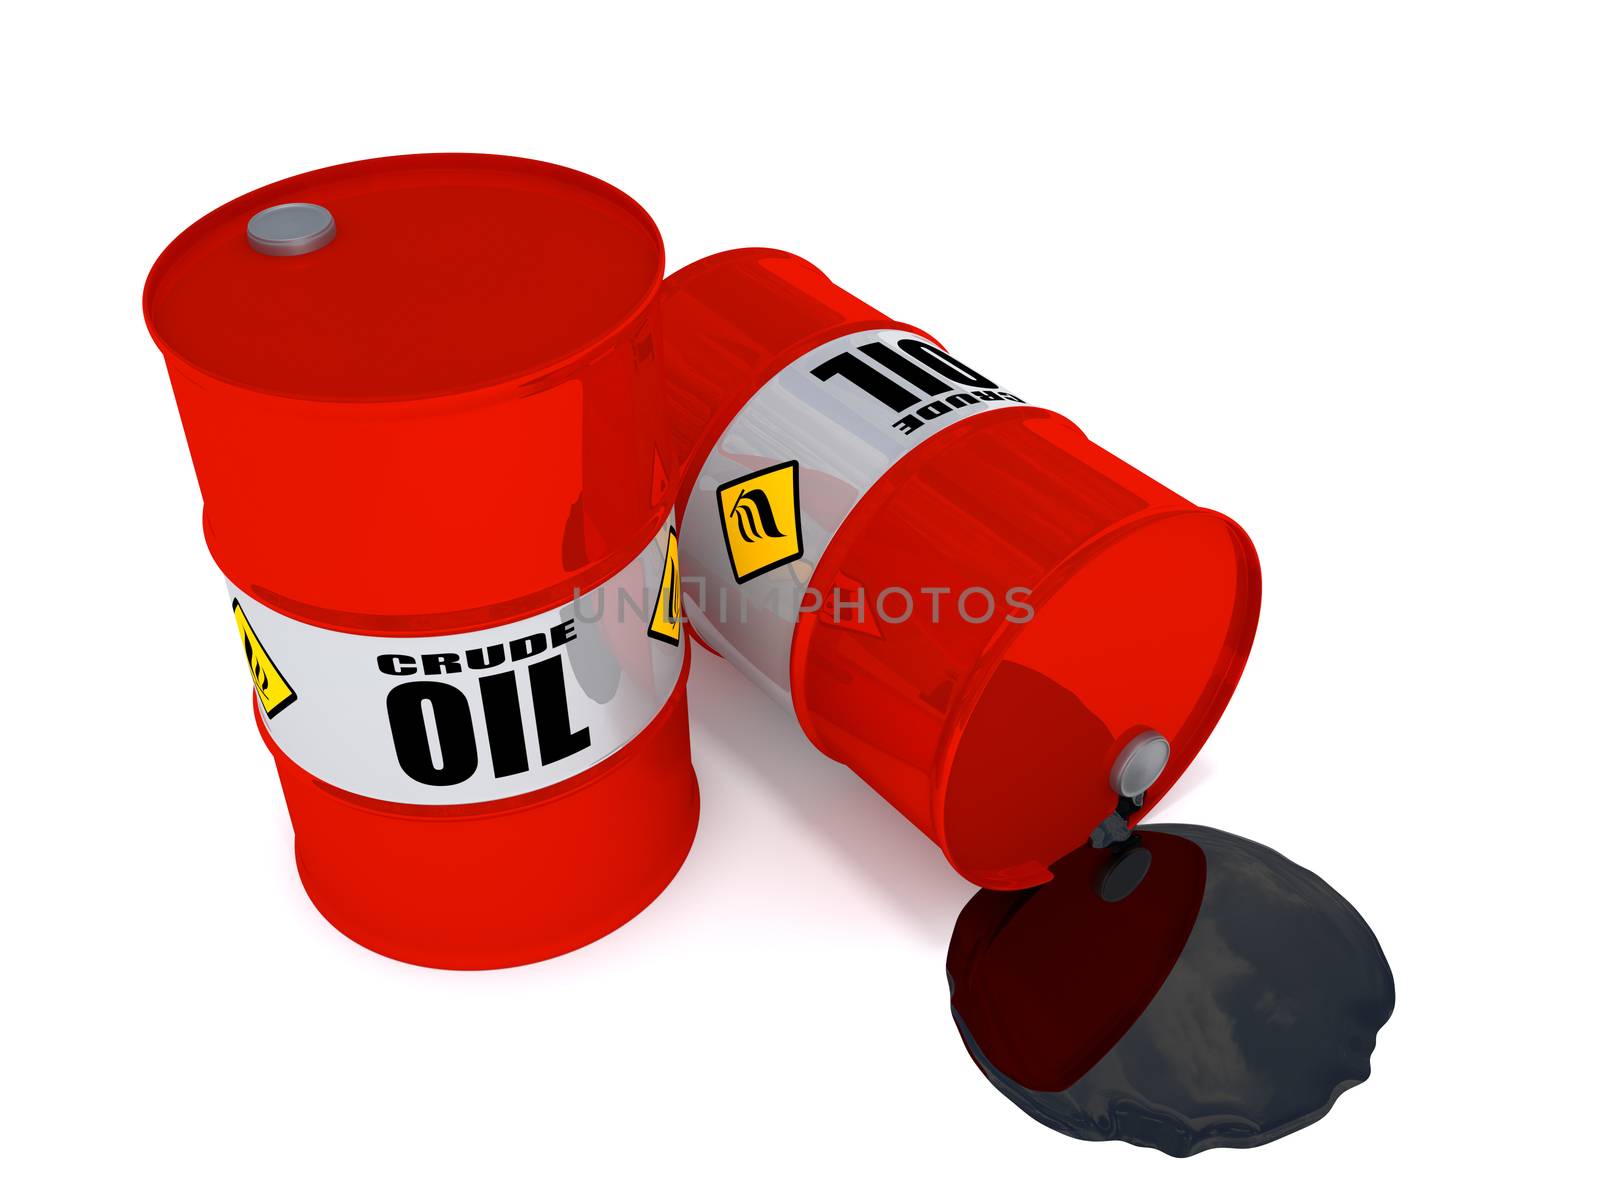 Oil drums leaking by tonsnoei